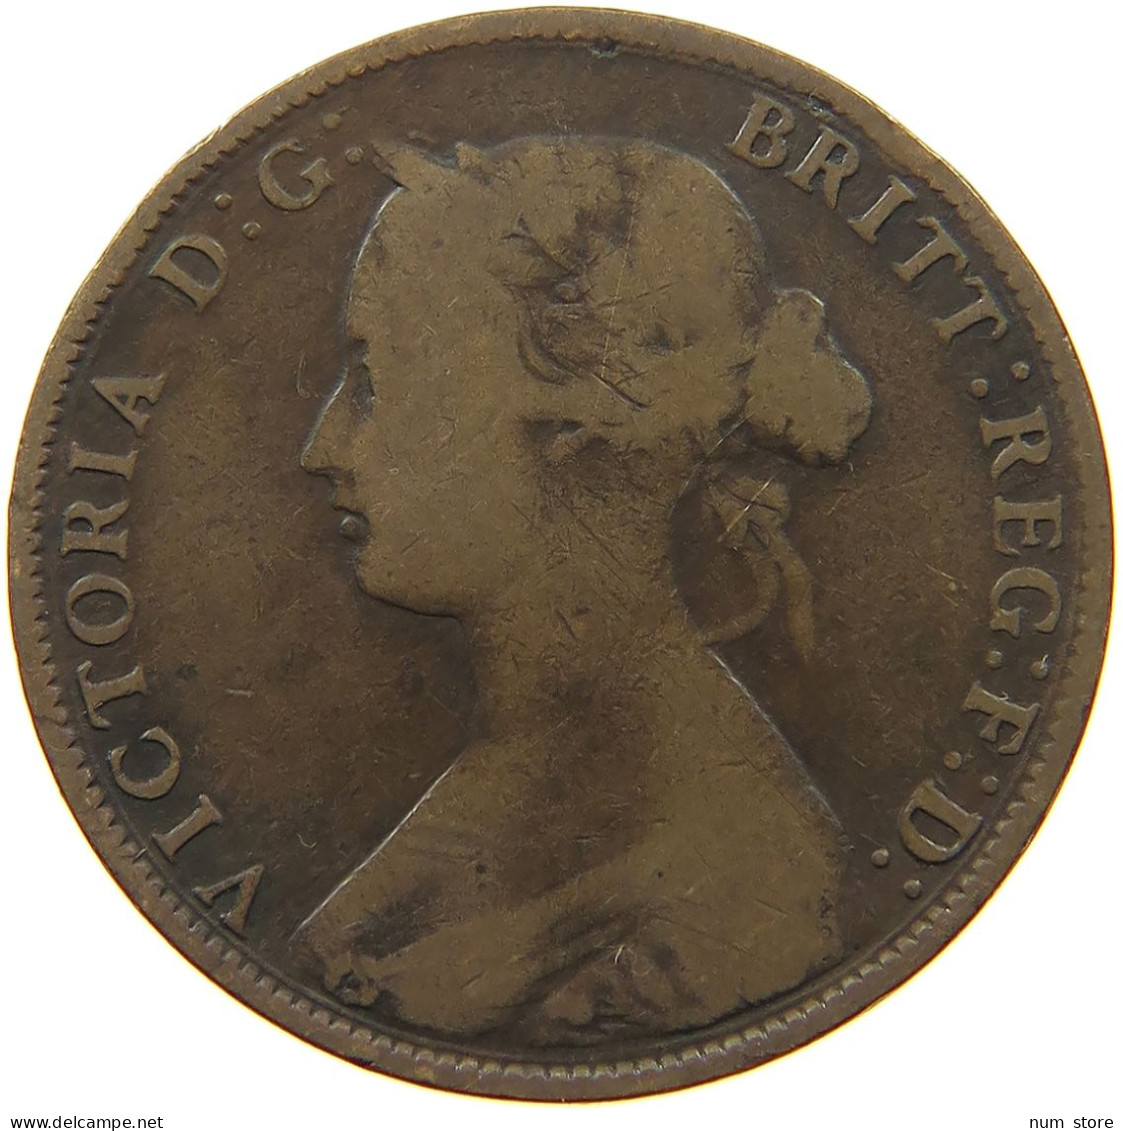 GREAT BRITAIN HALFPENNY 1861 Victoria 1837-1901 #a011 0395 - C. 1/2 Penny